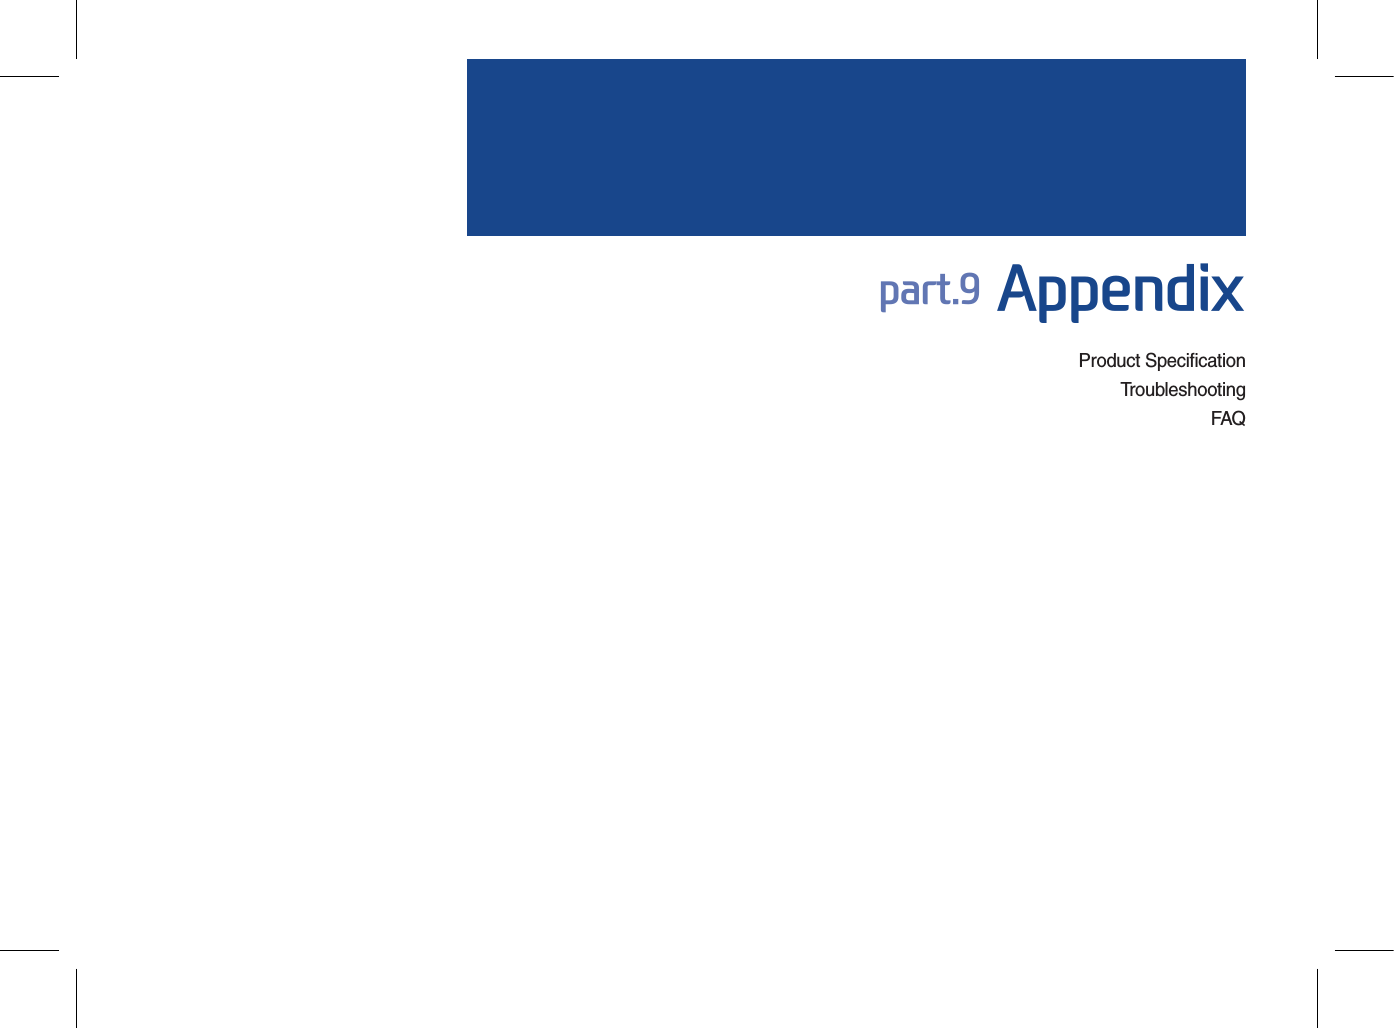 Product SpecificationTroubleshootingFAQpart.9 Appendix